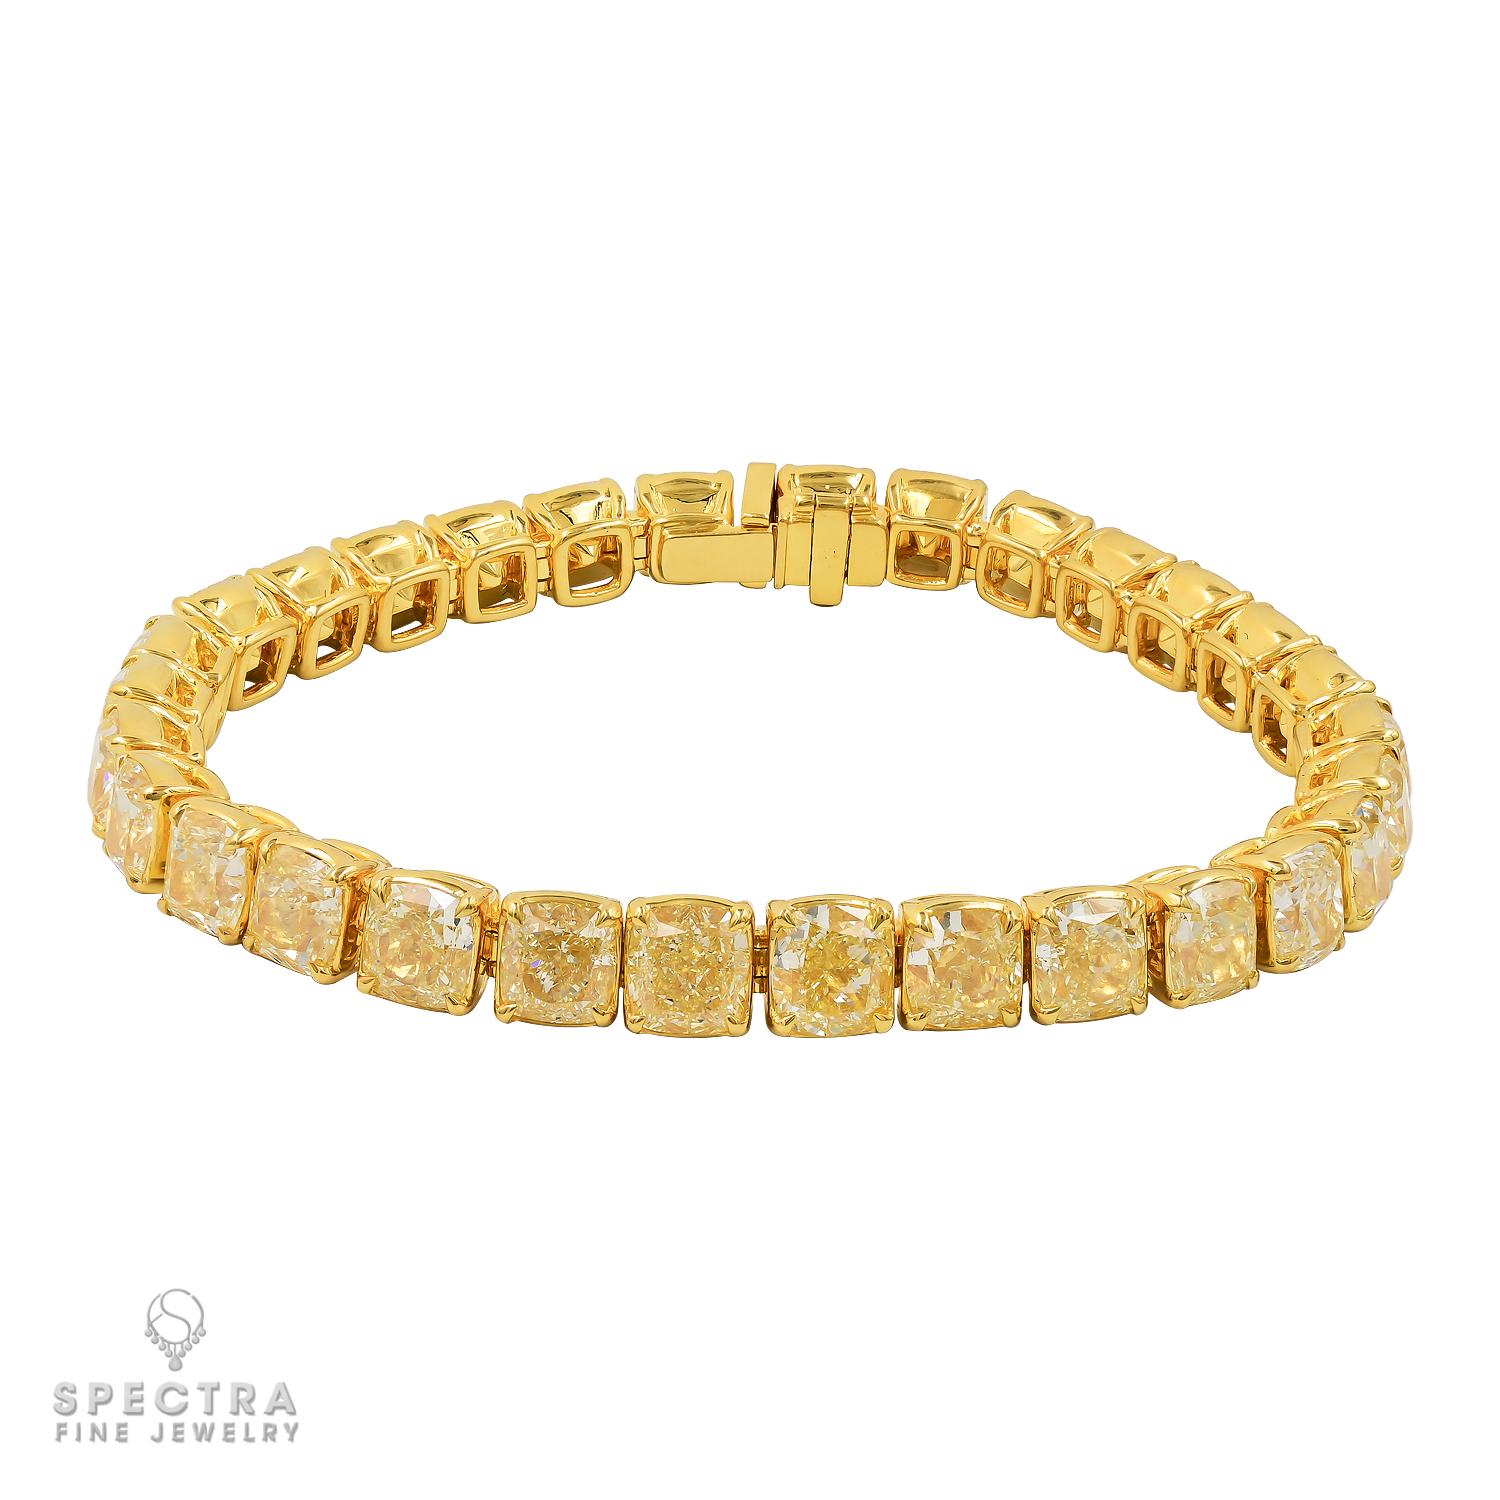 Cushion Cut Spectra Fine Jewelry 32.83 Carat Yellow Diamond Bracelet For Sale